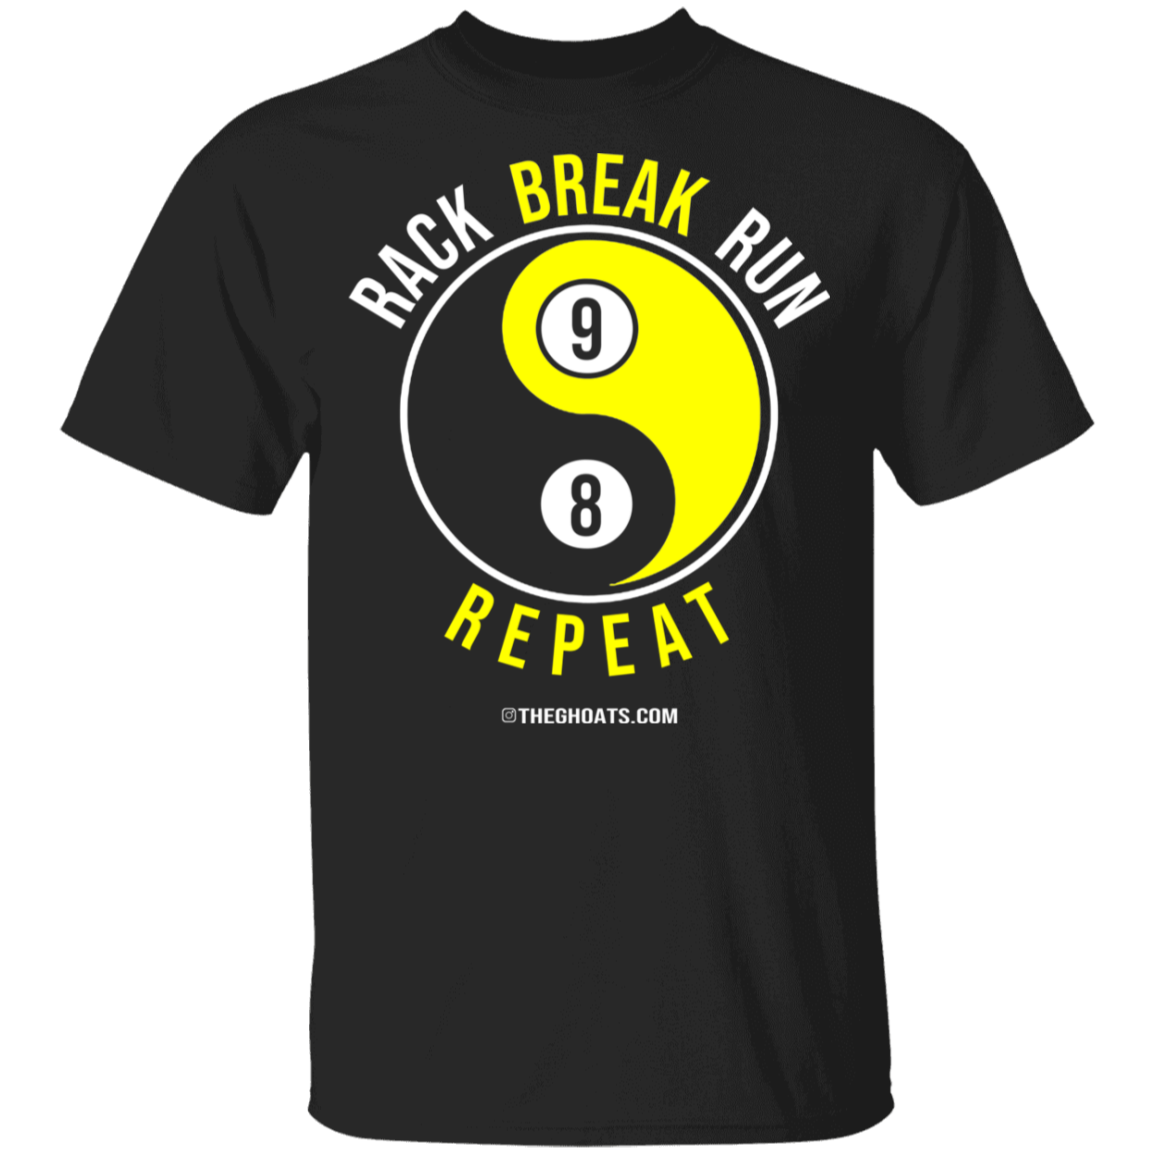 The GHOATS Custom Design #7. Rack Break Run Repeat. Ying Yang. Youth Basic 100% Cotton T-Shirt